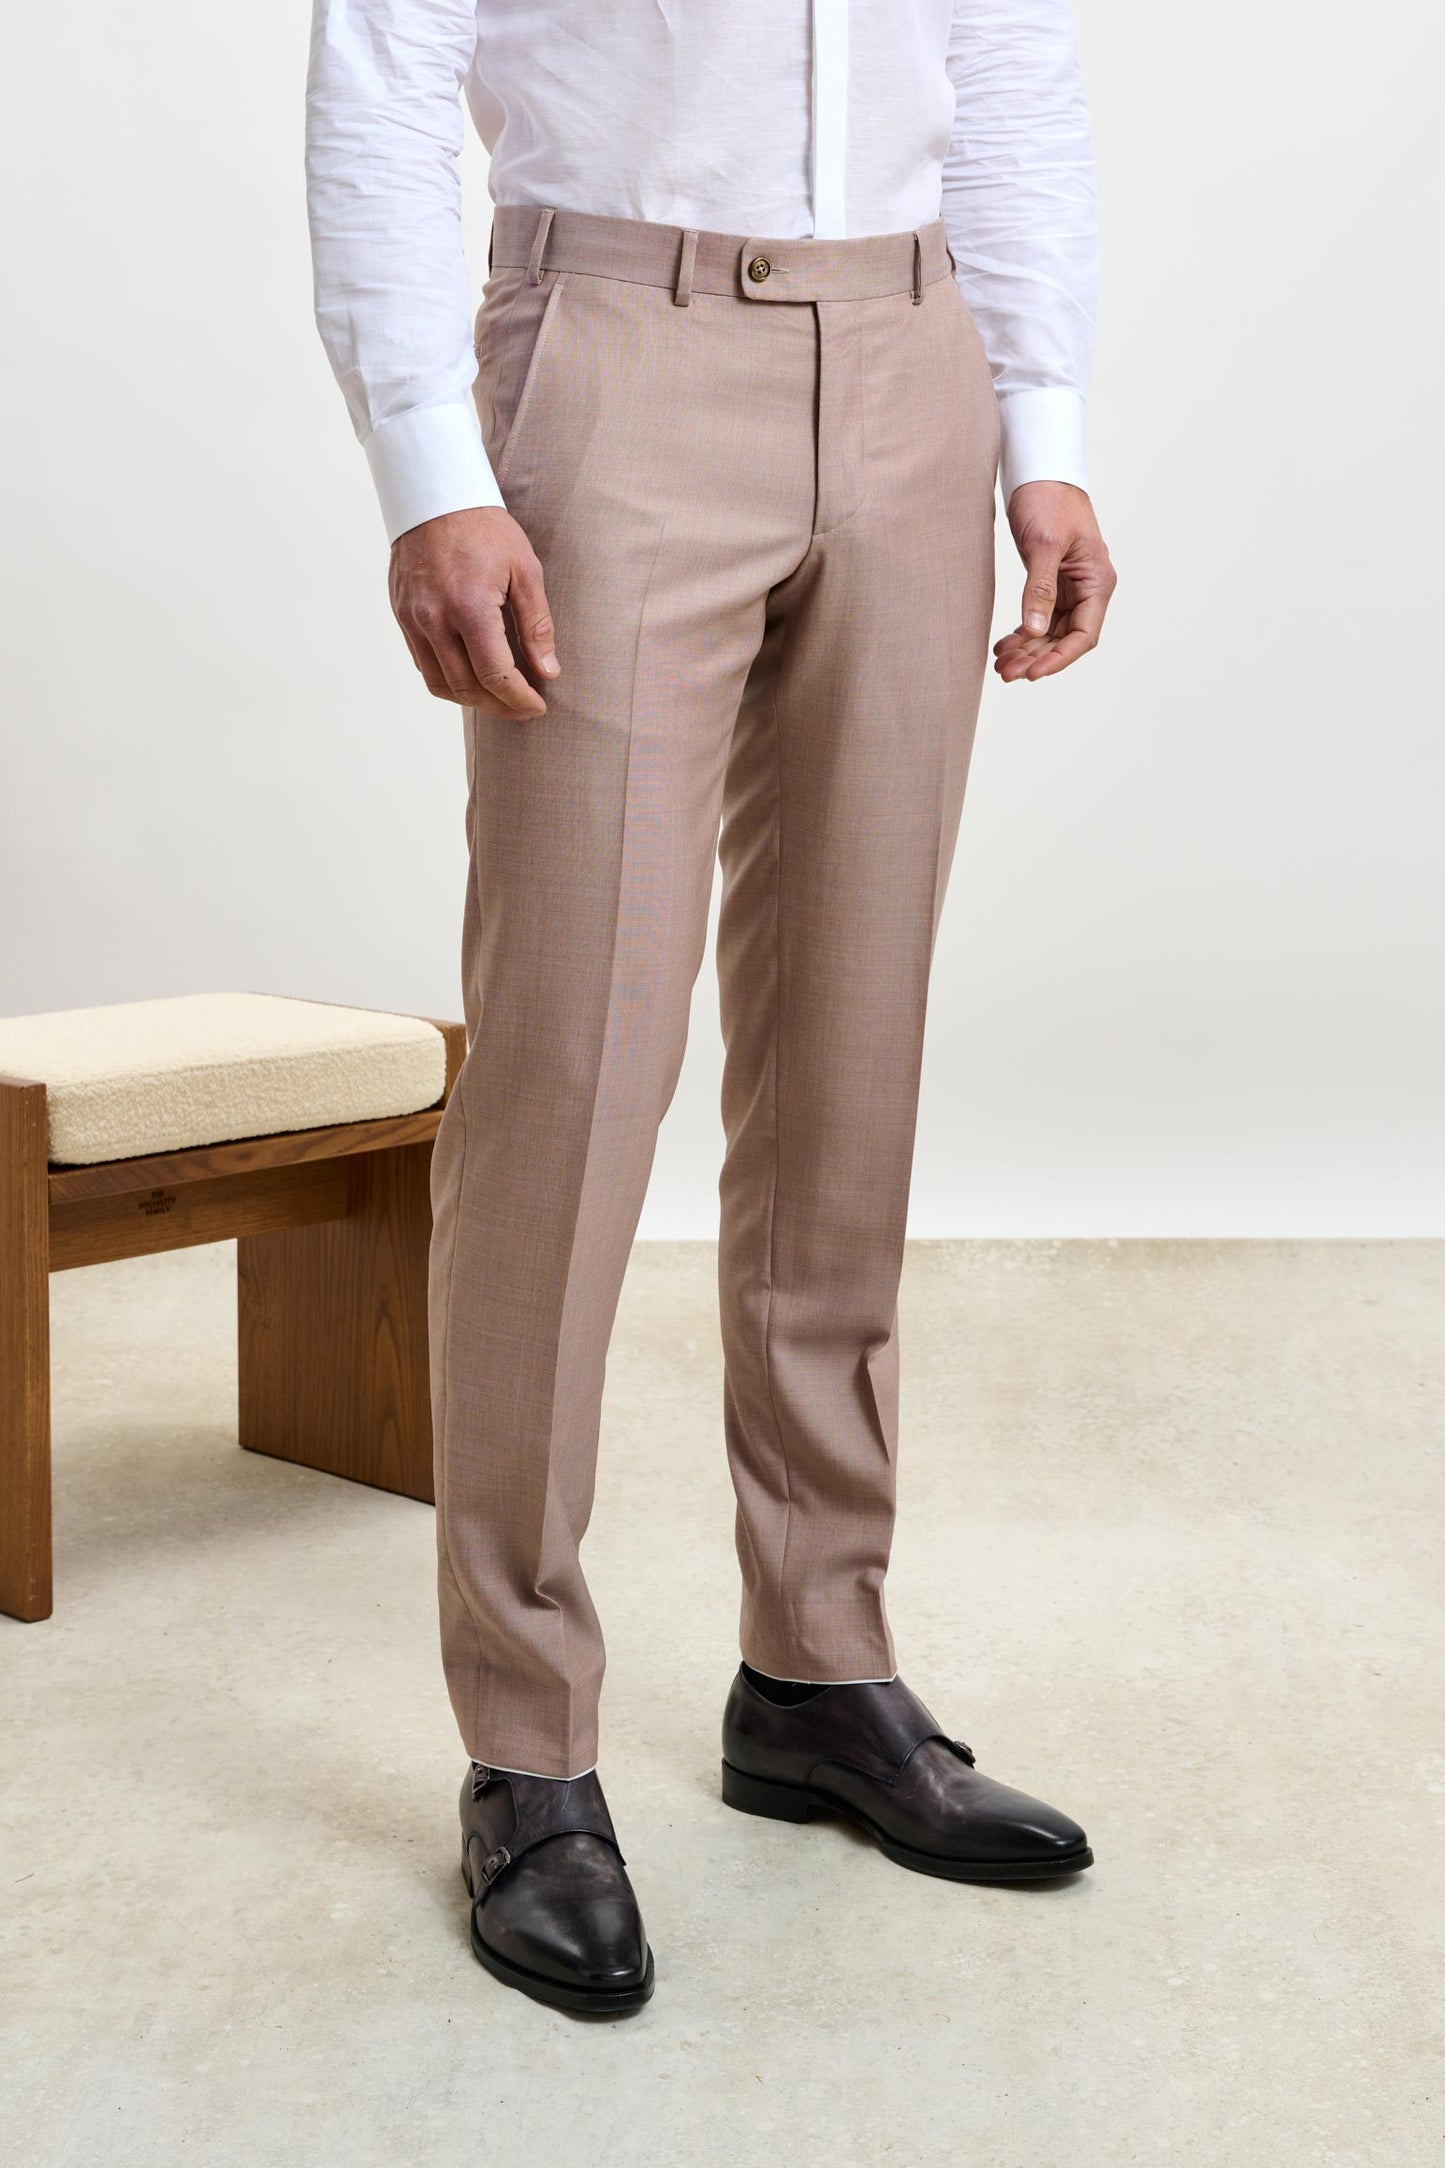 Kenton Suit Sleek Plain Beige